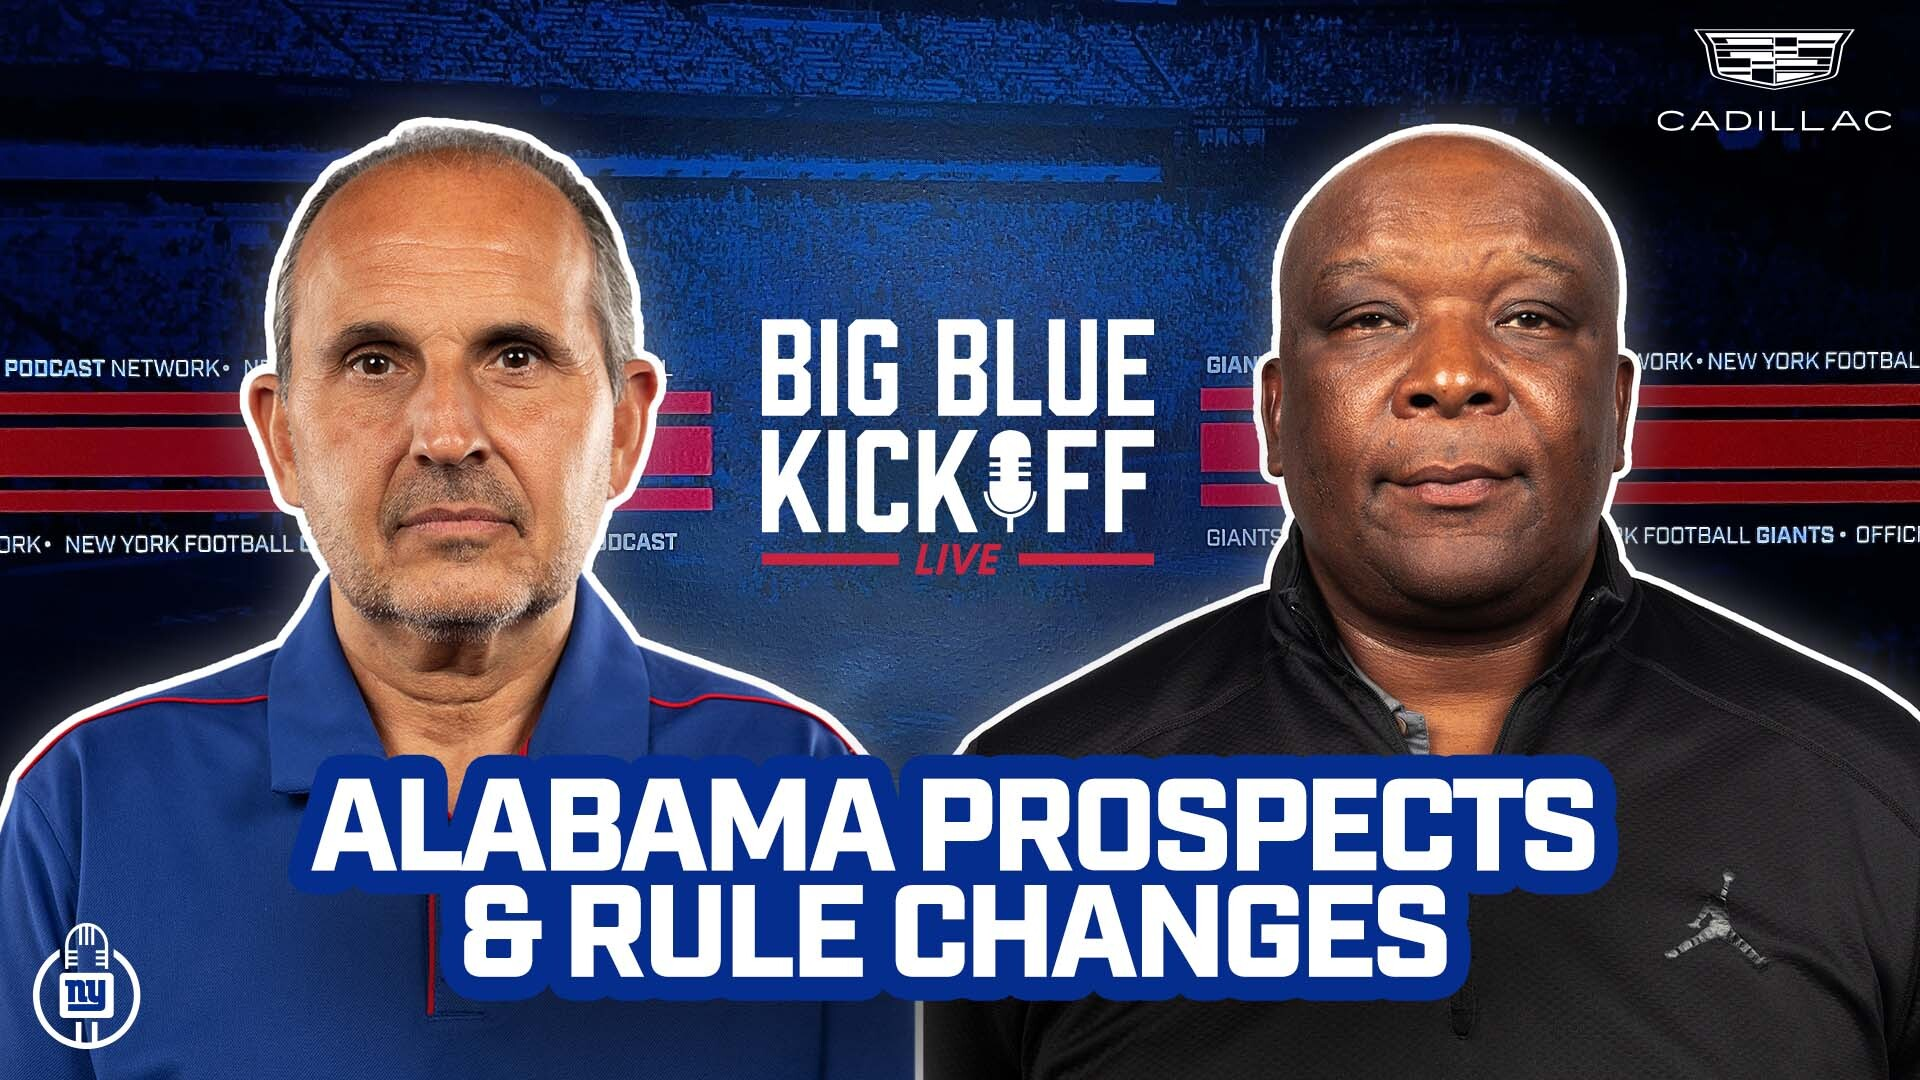 Big Blue Kickoff Live 3/26 | Alabama Prospects & Rule Changes